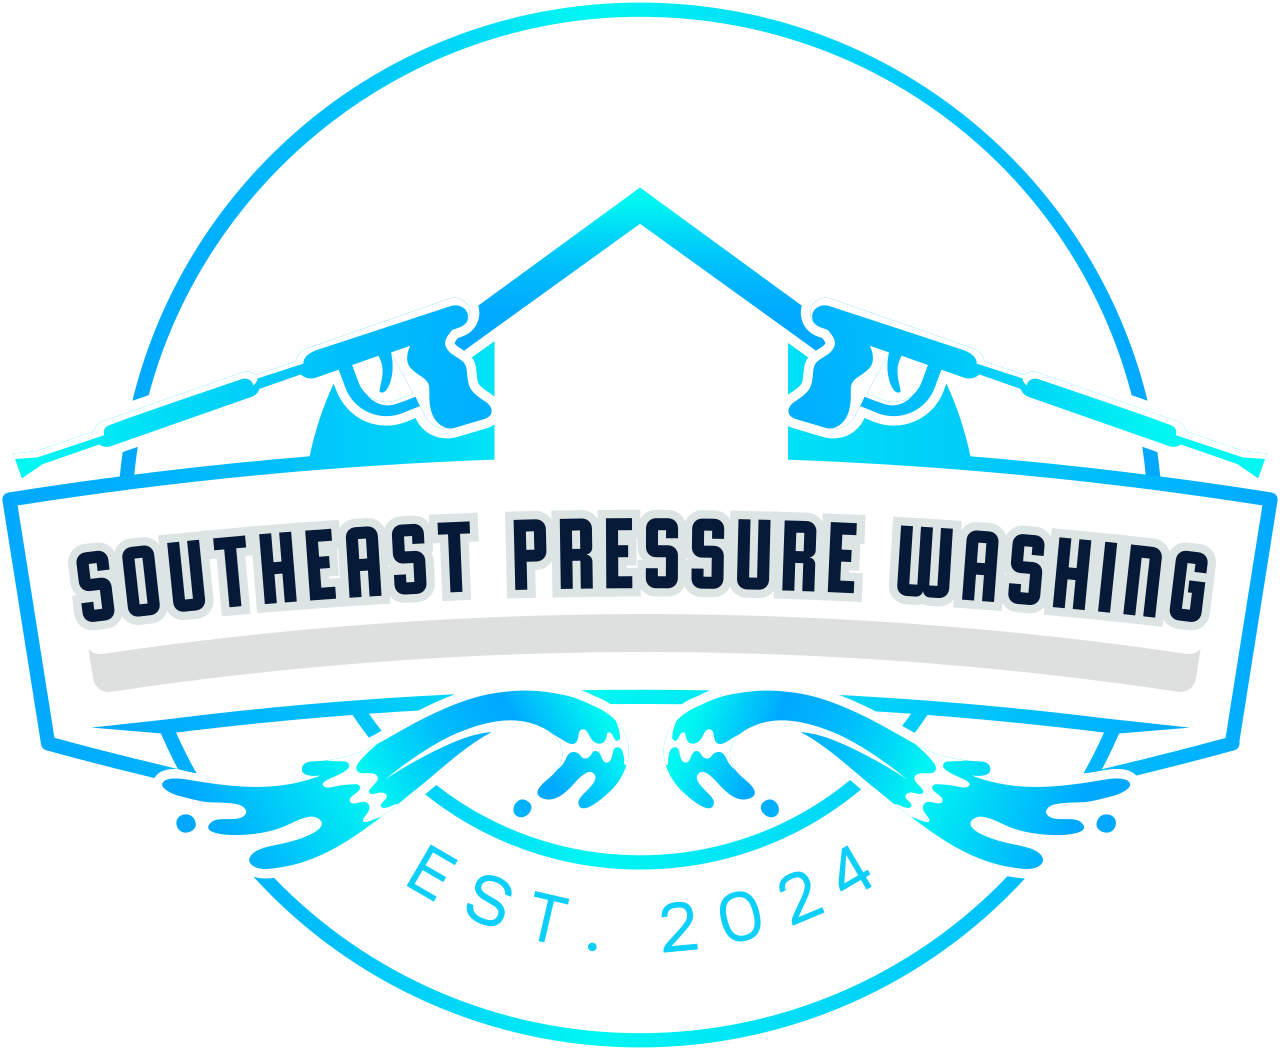 SOUTHEAST PRESSURE WASHING's logo